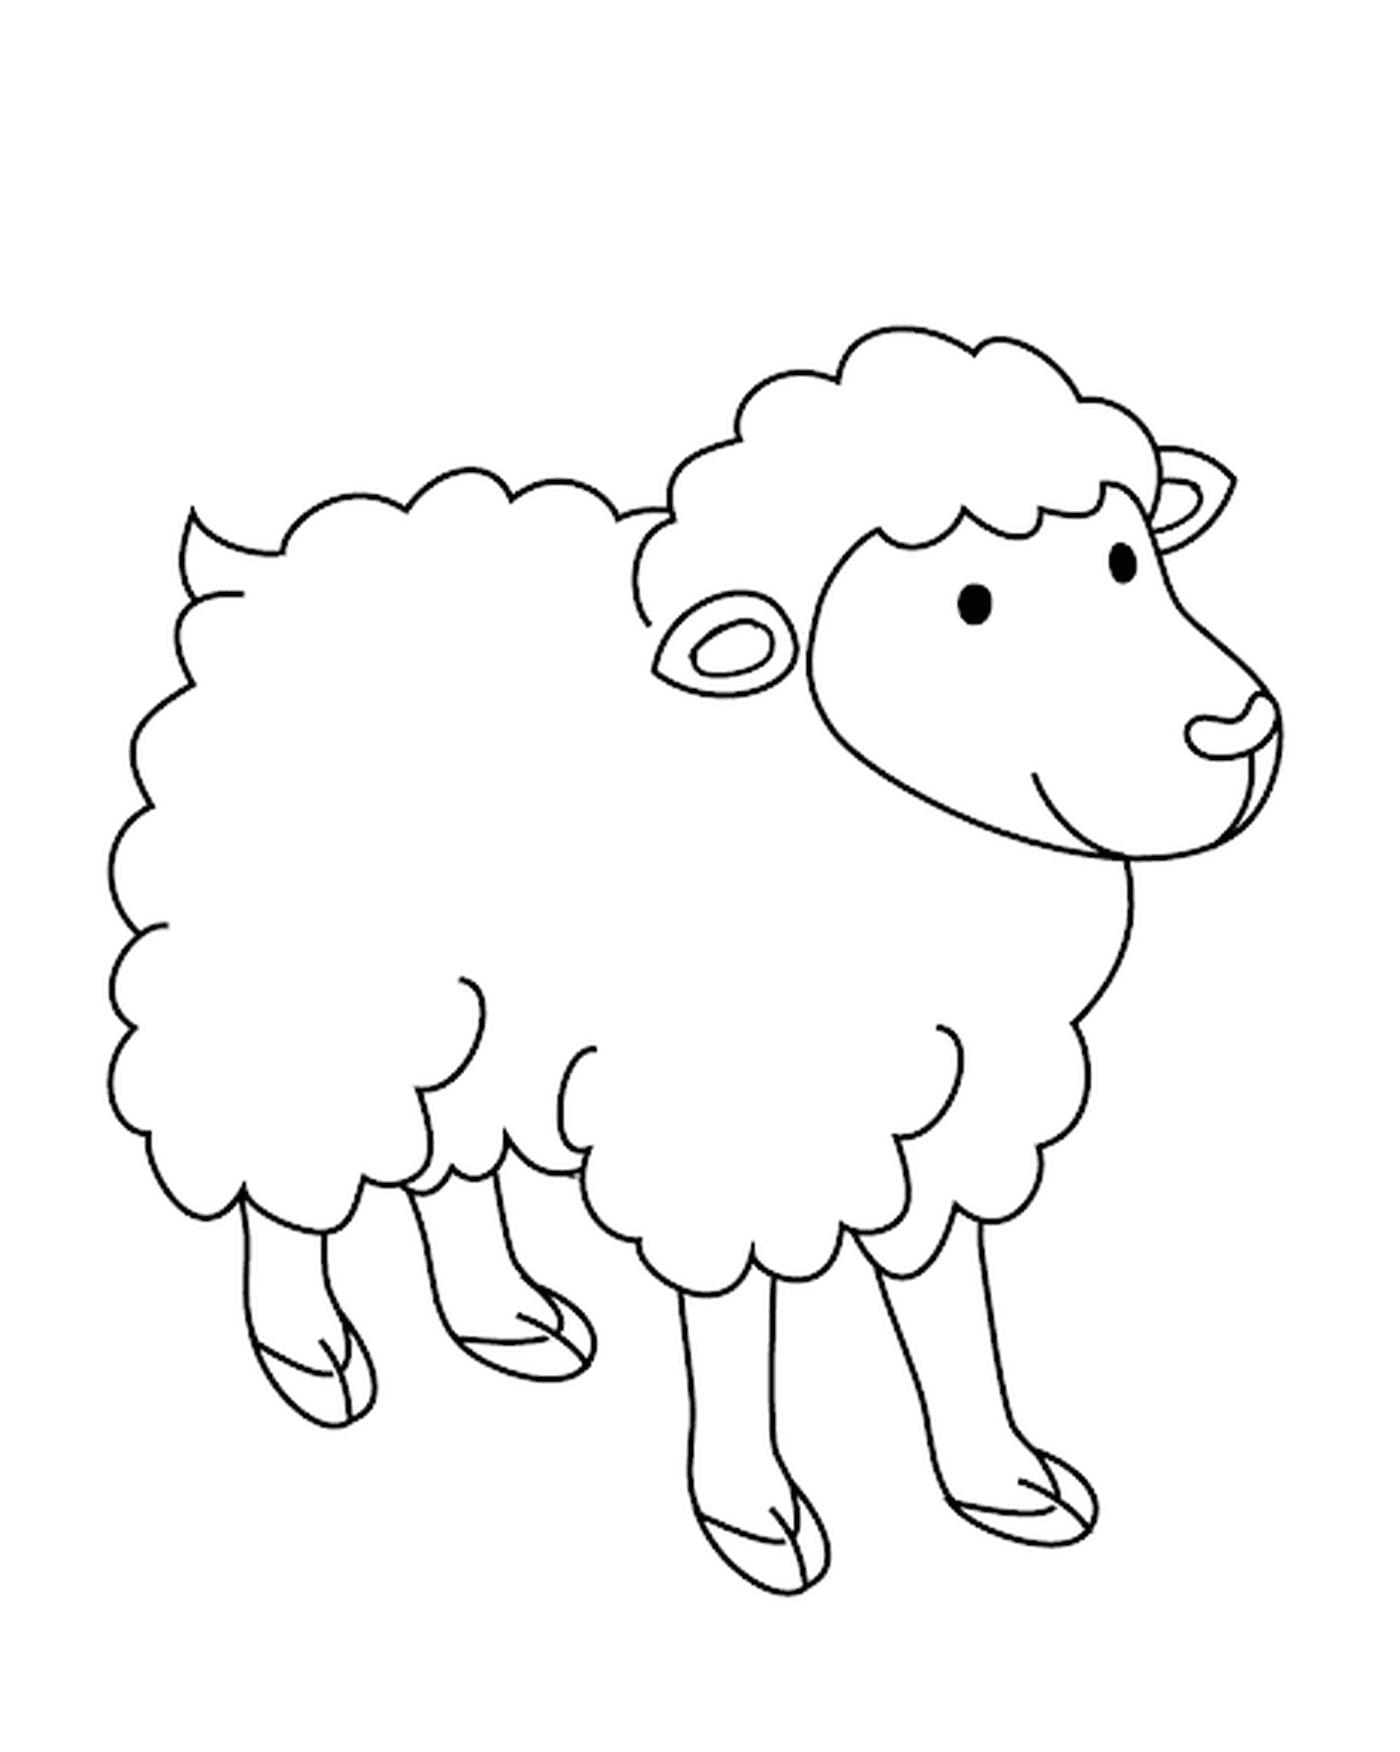  sheep with long wool 